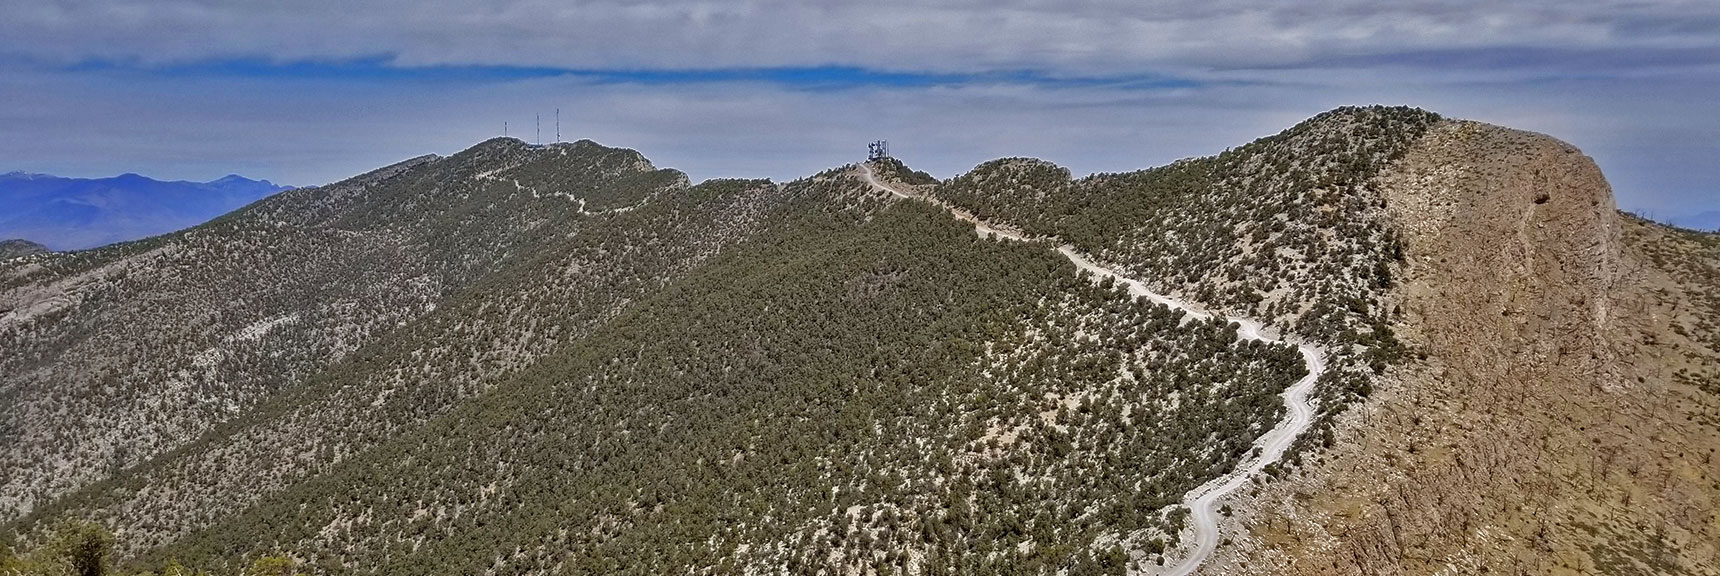 Southern Approach | Potosi Mountain | Spring Mountains, Nevada